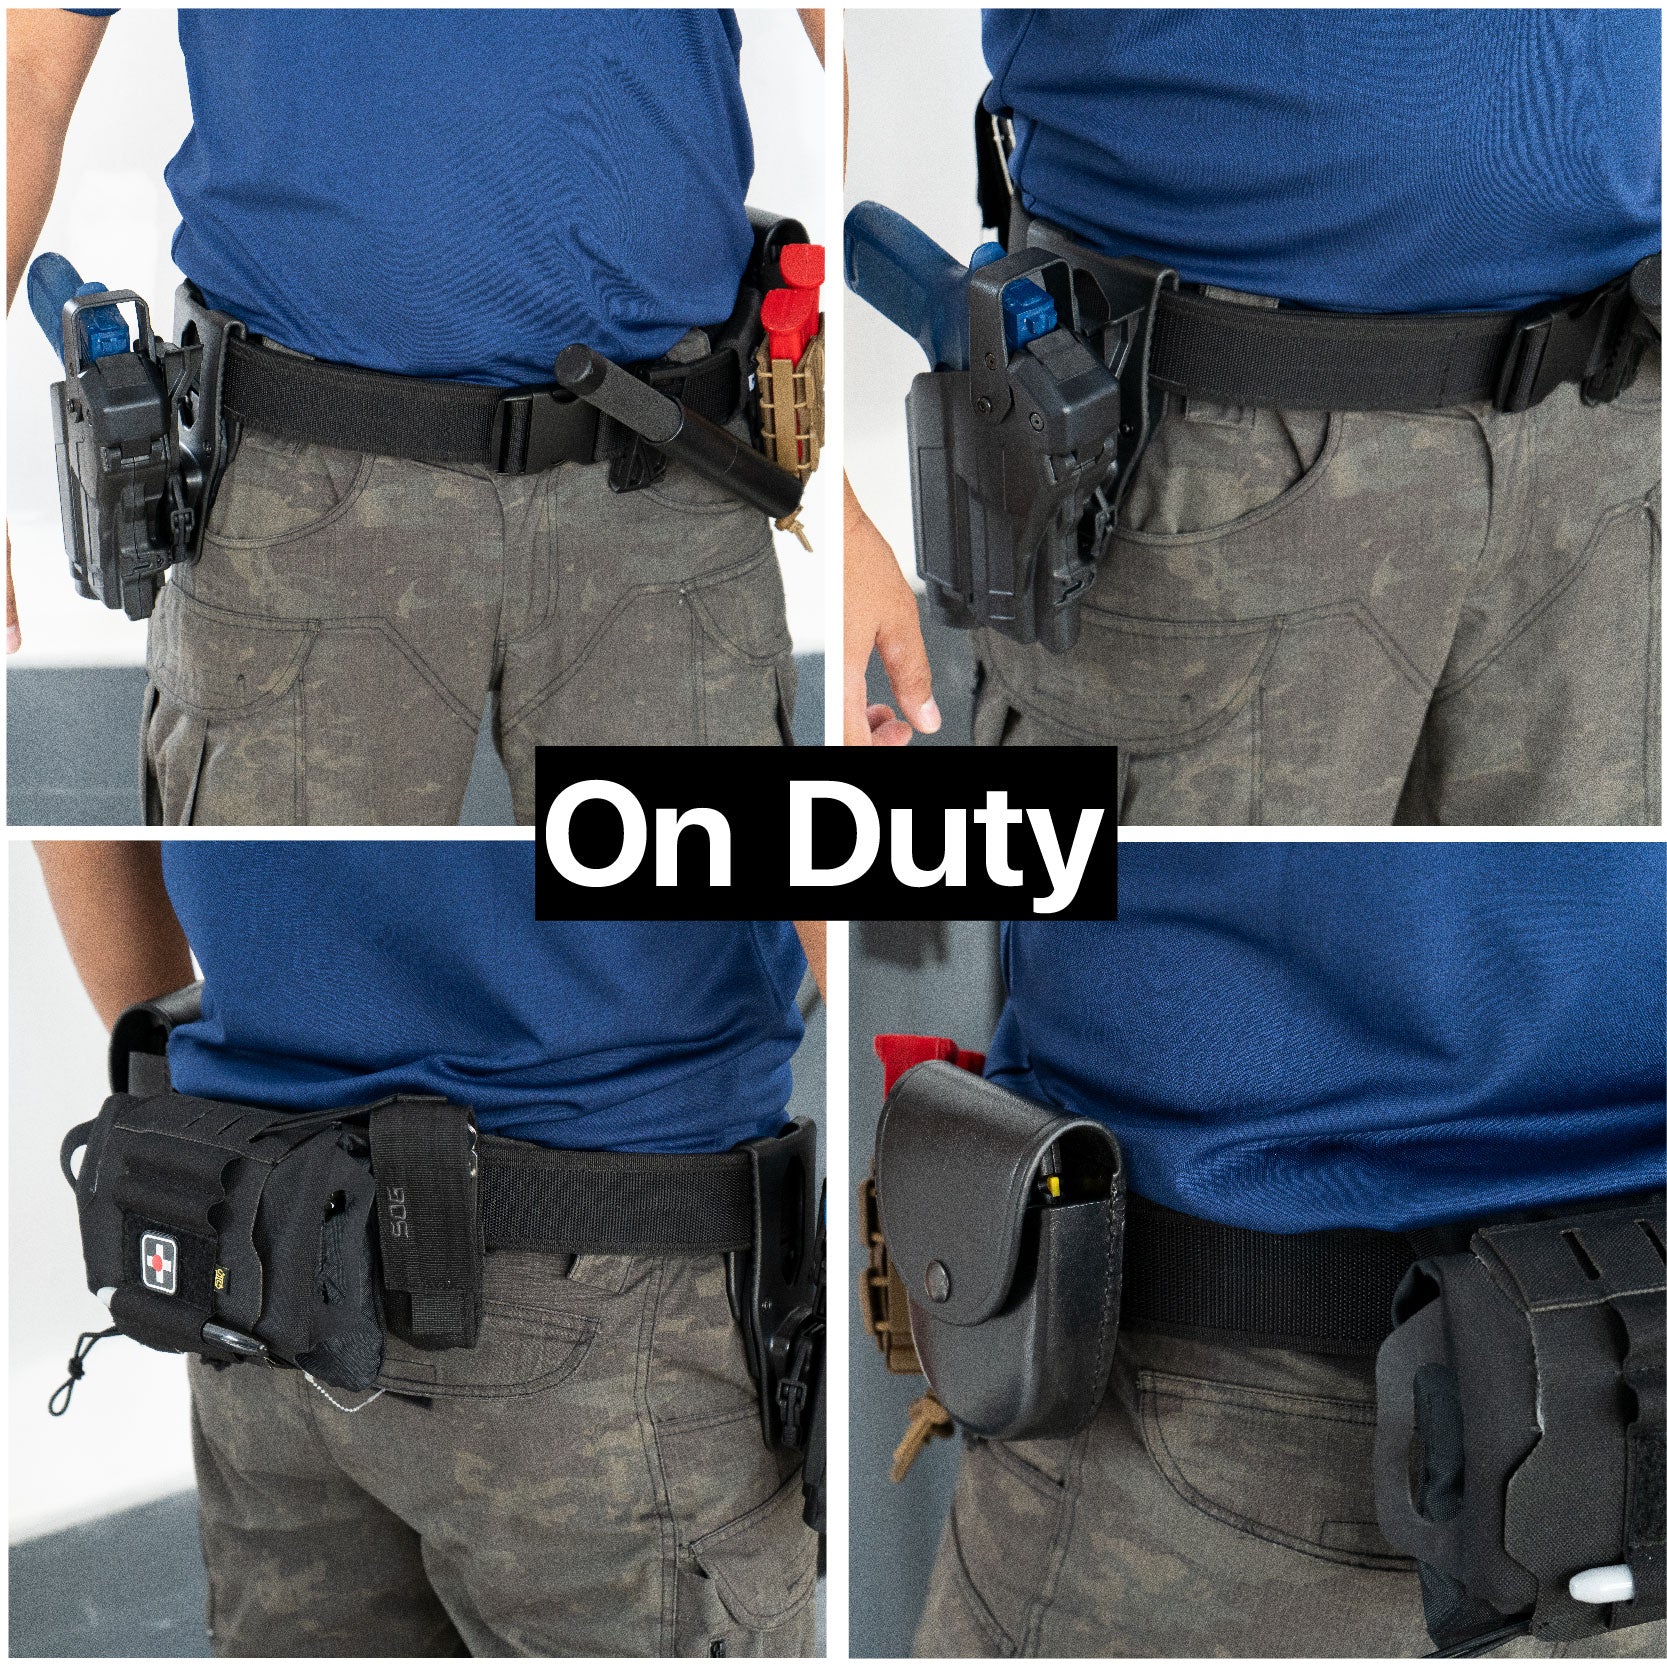 Valor PX 2" Duty operater belt (Pre-Order 5 Days)